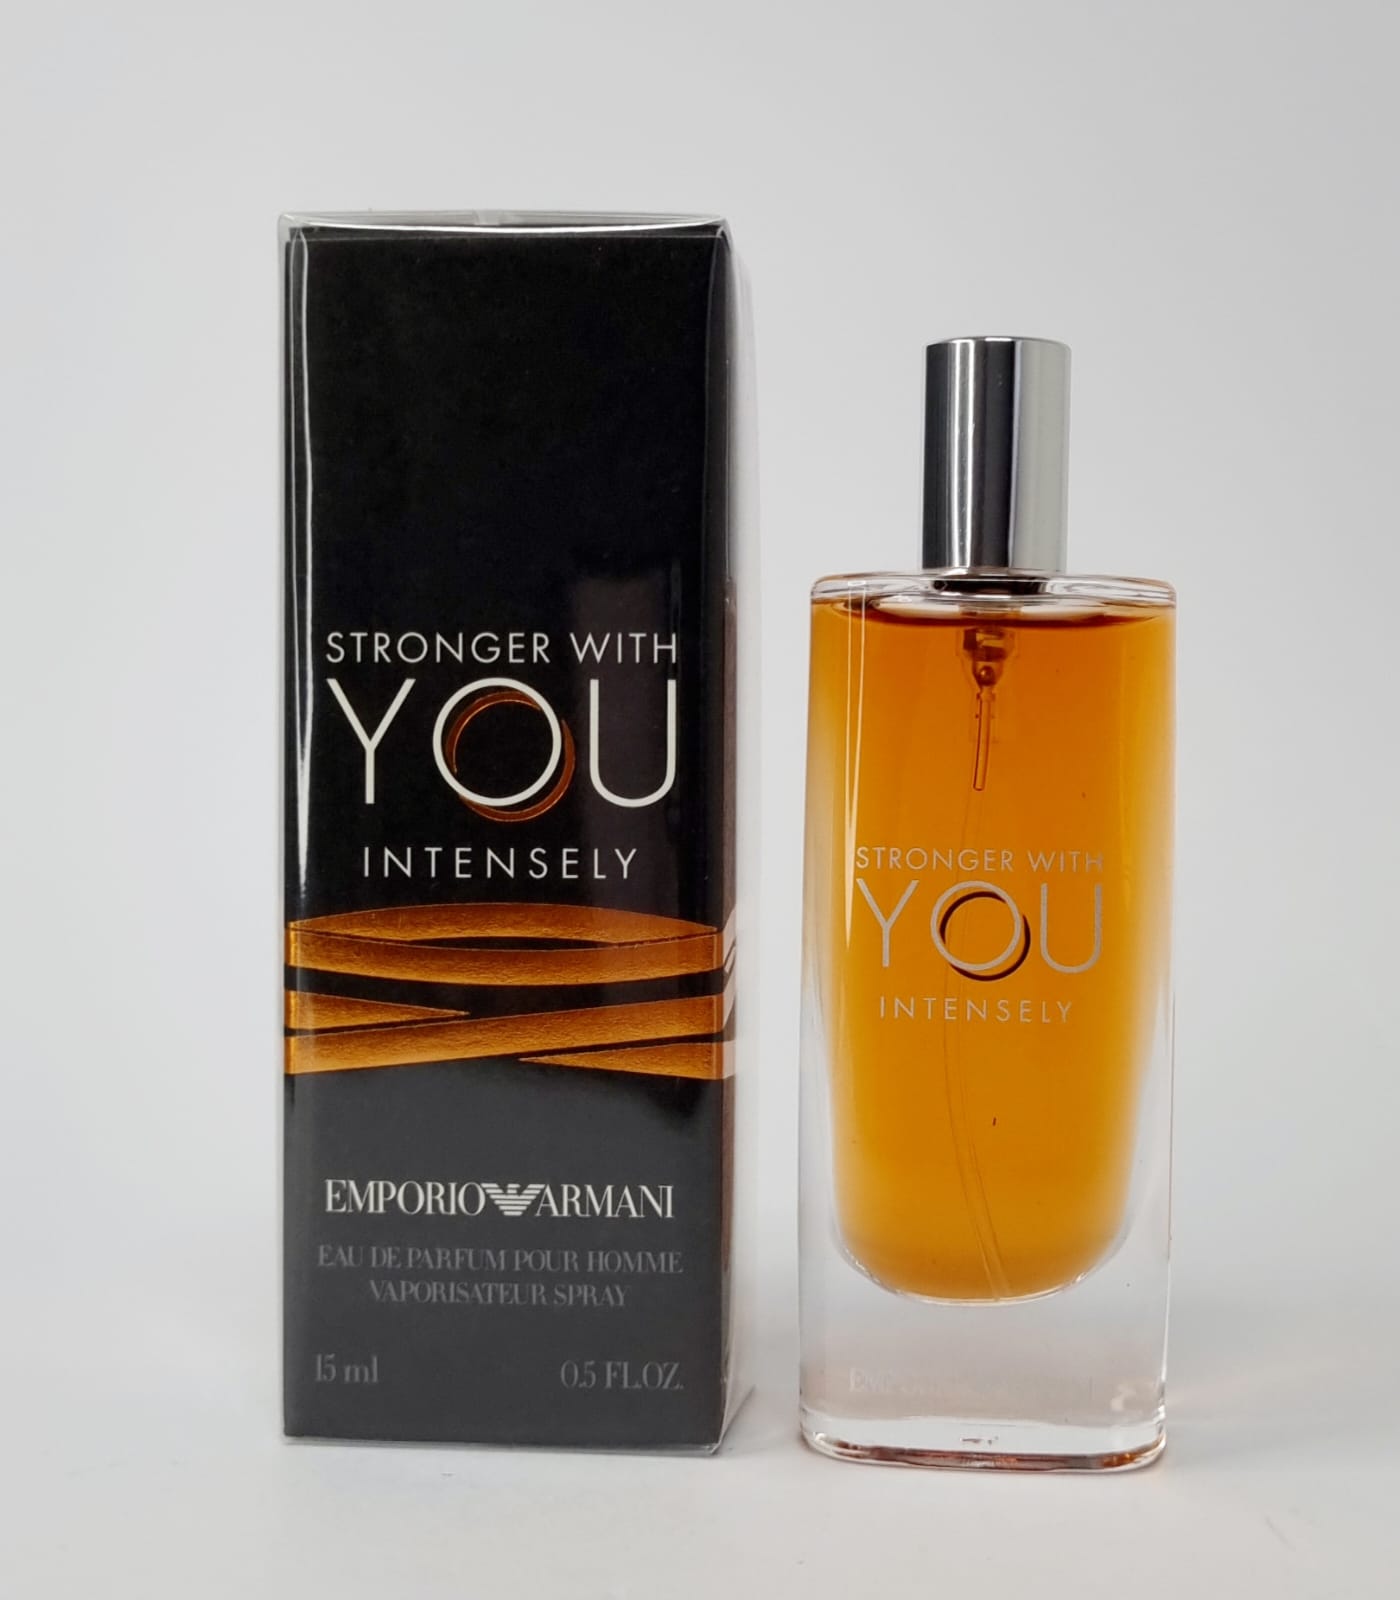 Emporio Armani Stronger With You Intensely Eau de Parfum Spray 15ml  [MINIATURE] | Lazada Singapore